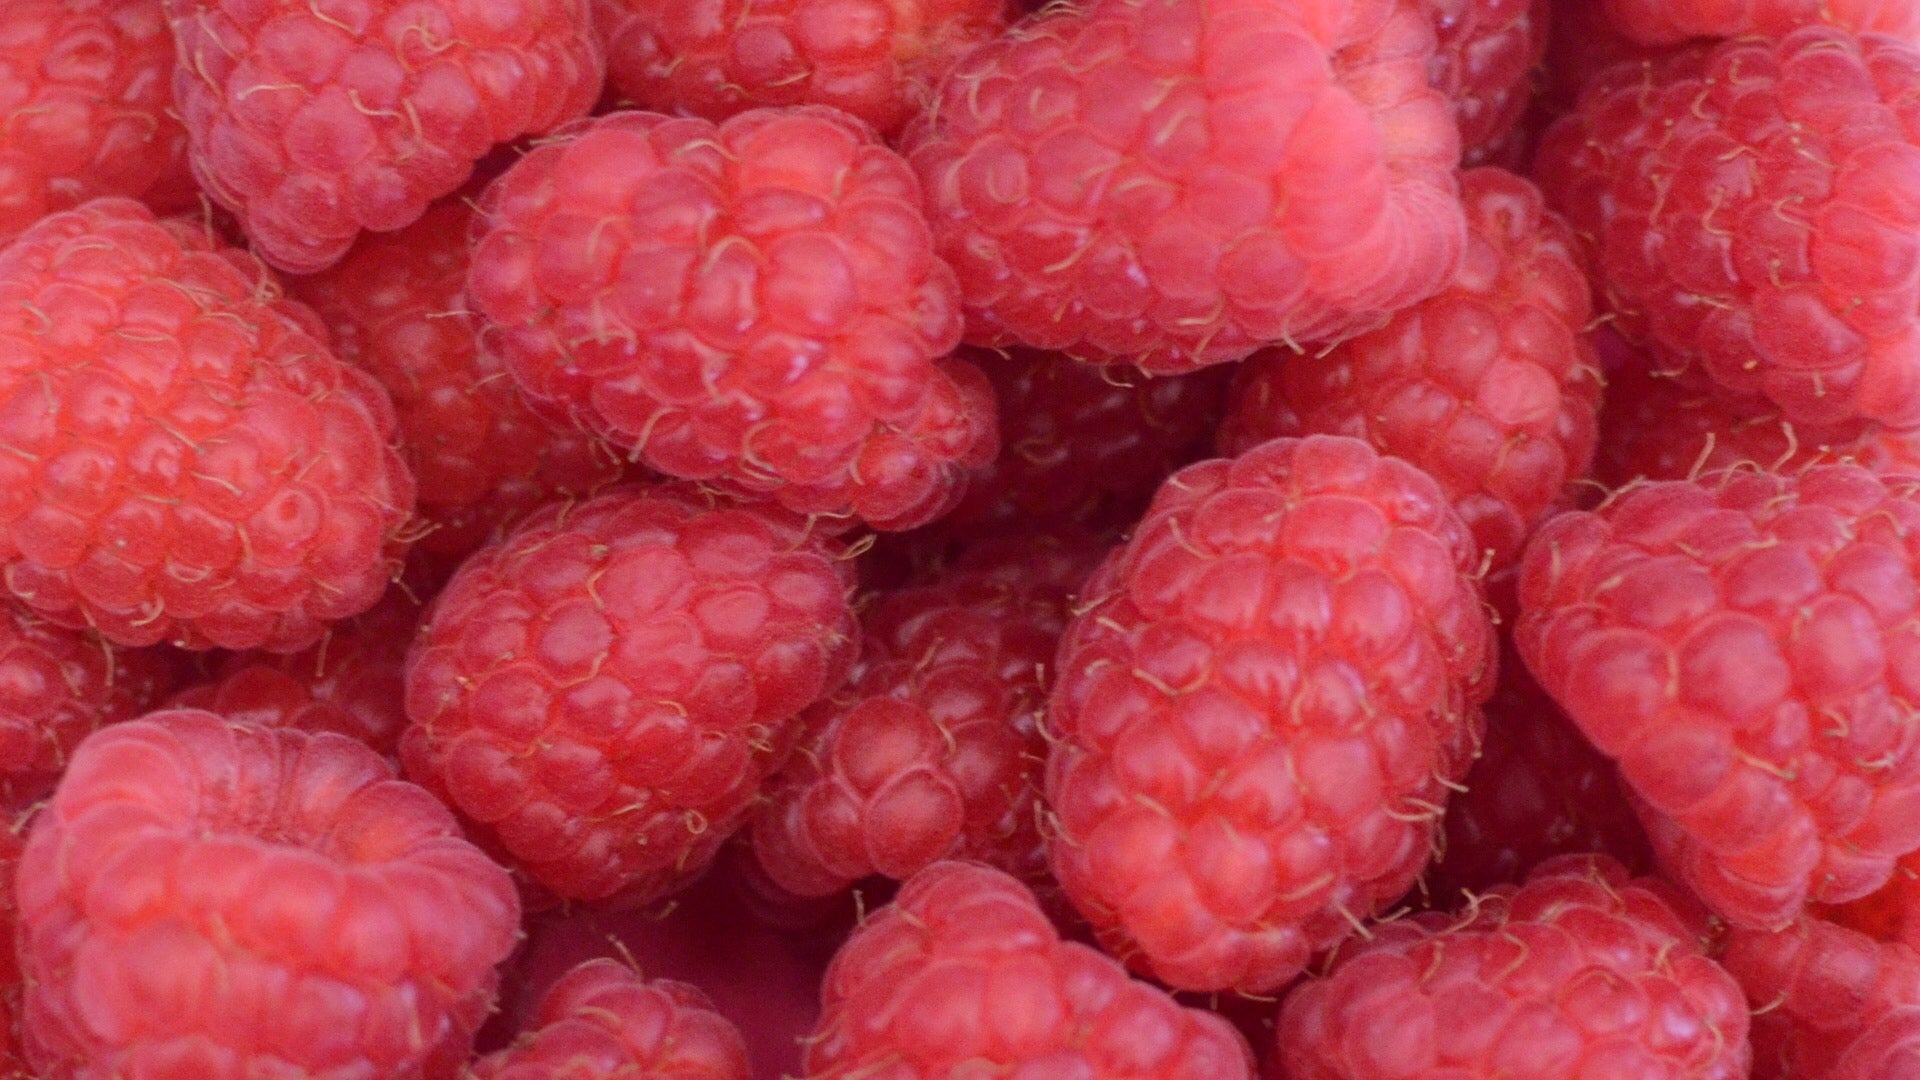 Close up of Raspberries.